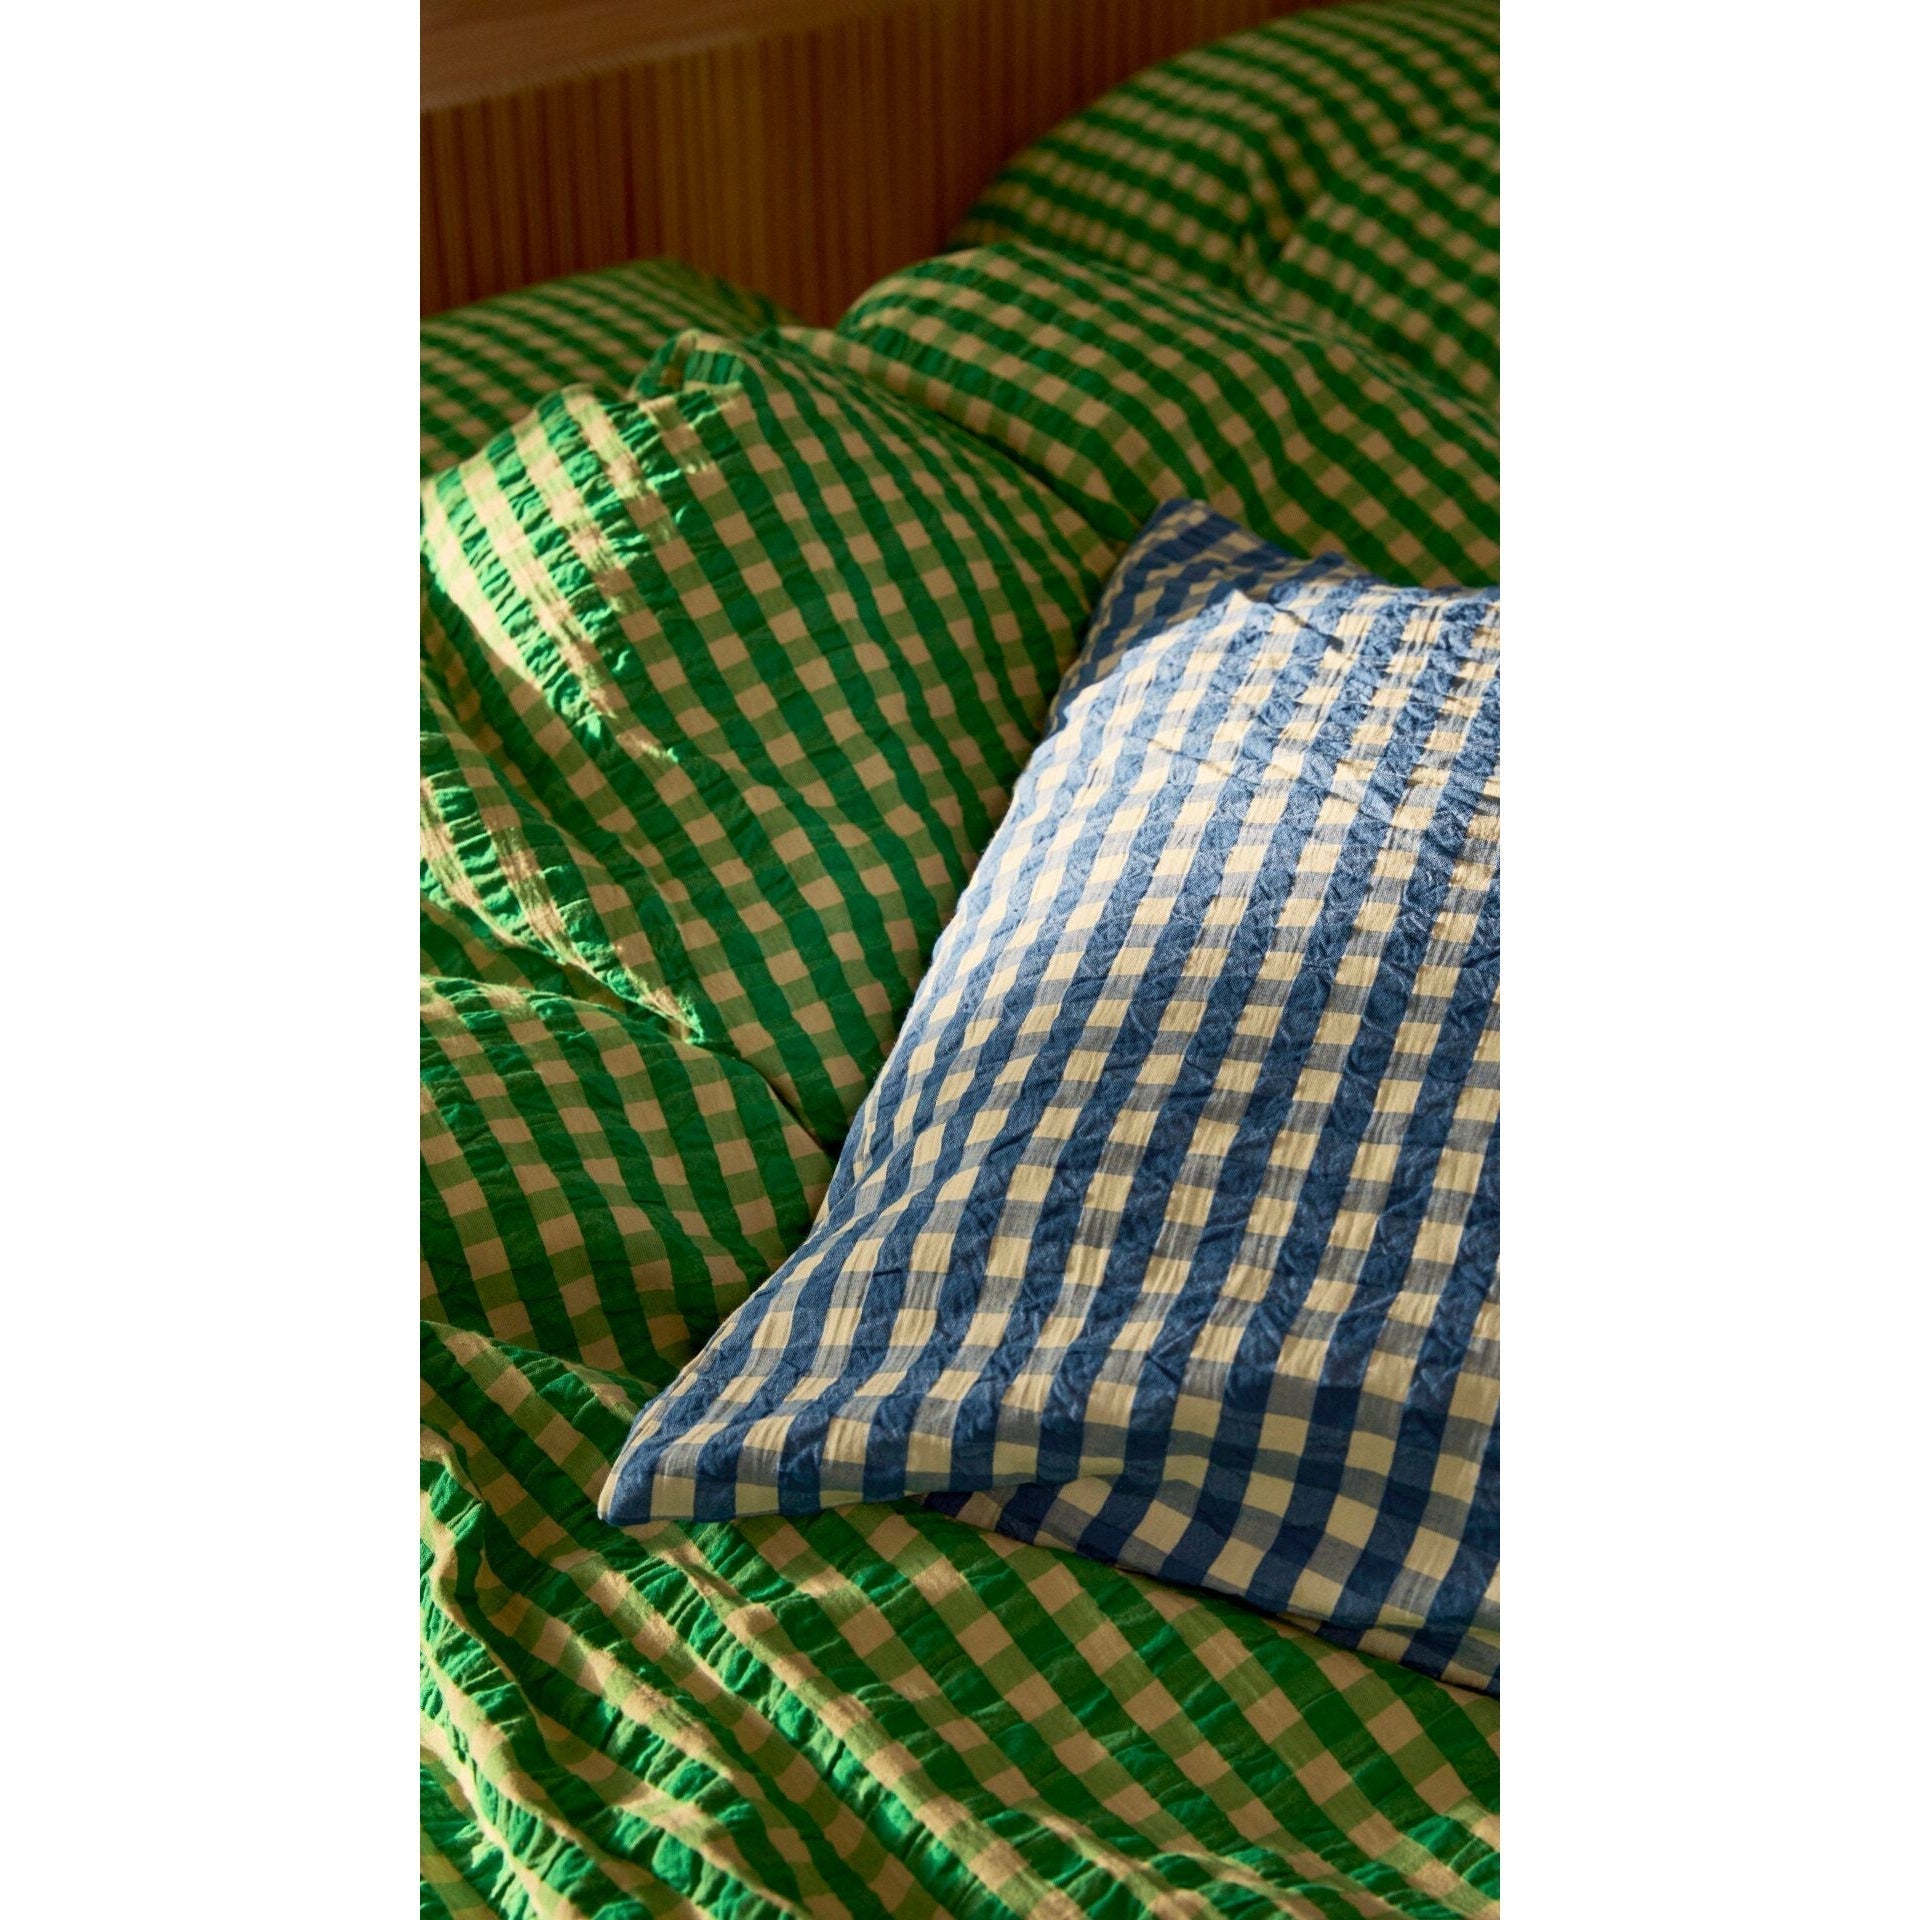 Juna Bæk & Bølge sengelinned 140x200 cm, grøn/sand